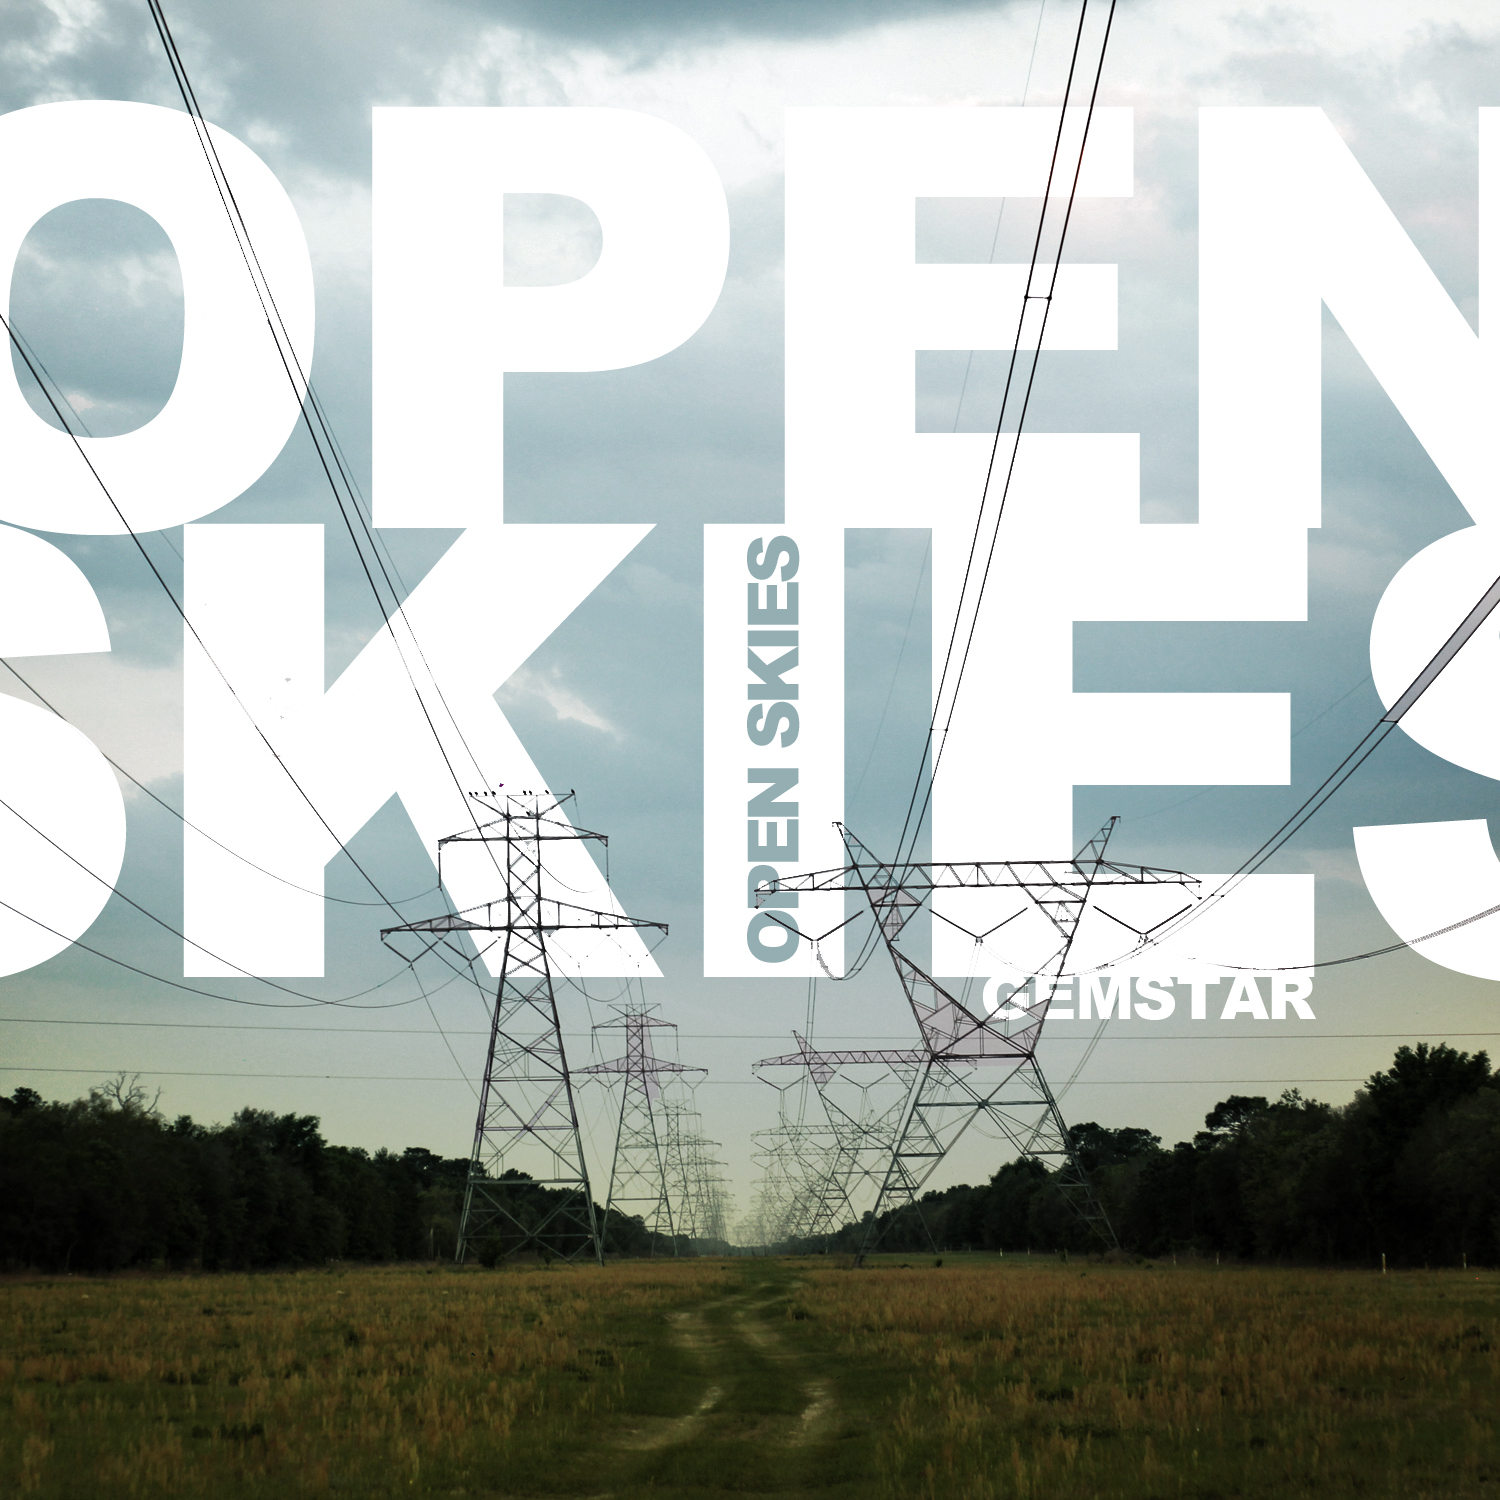  Gemstar – Open Skies